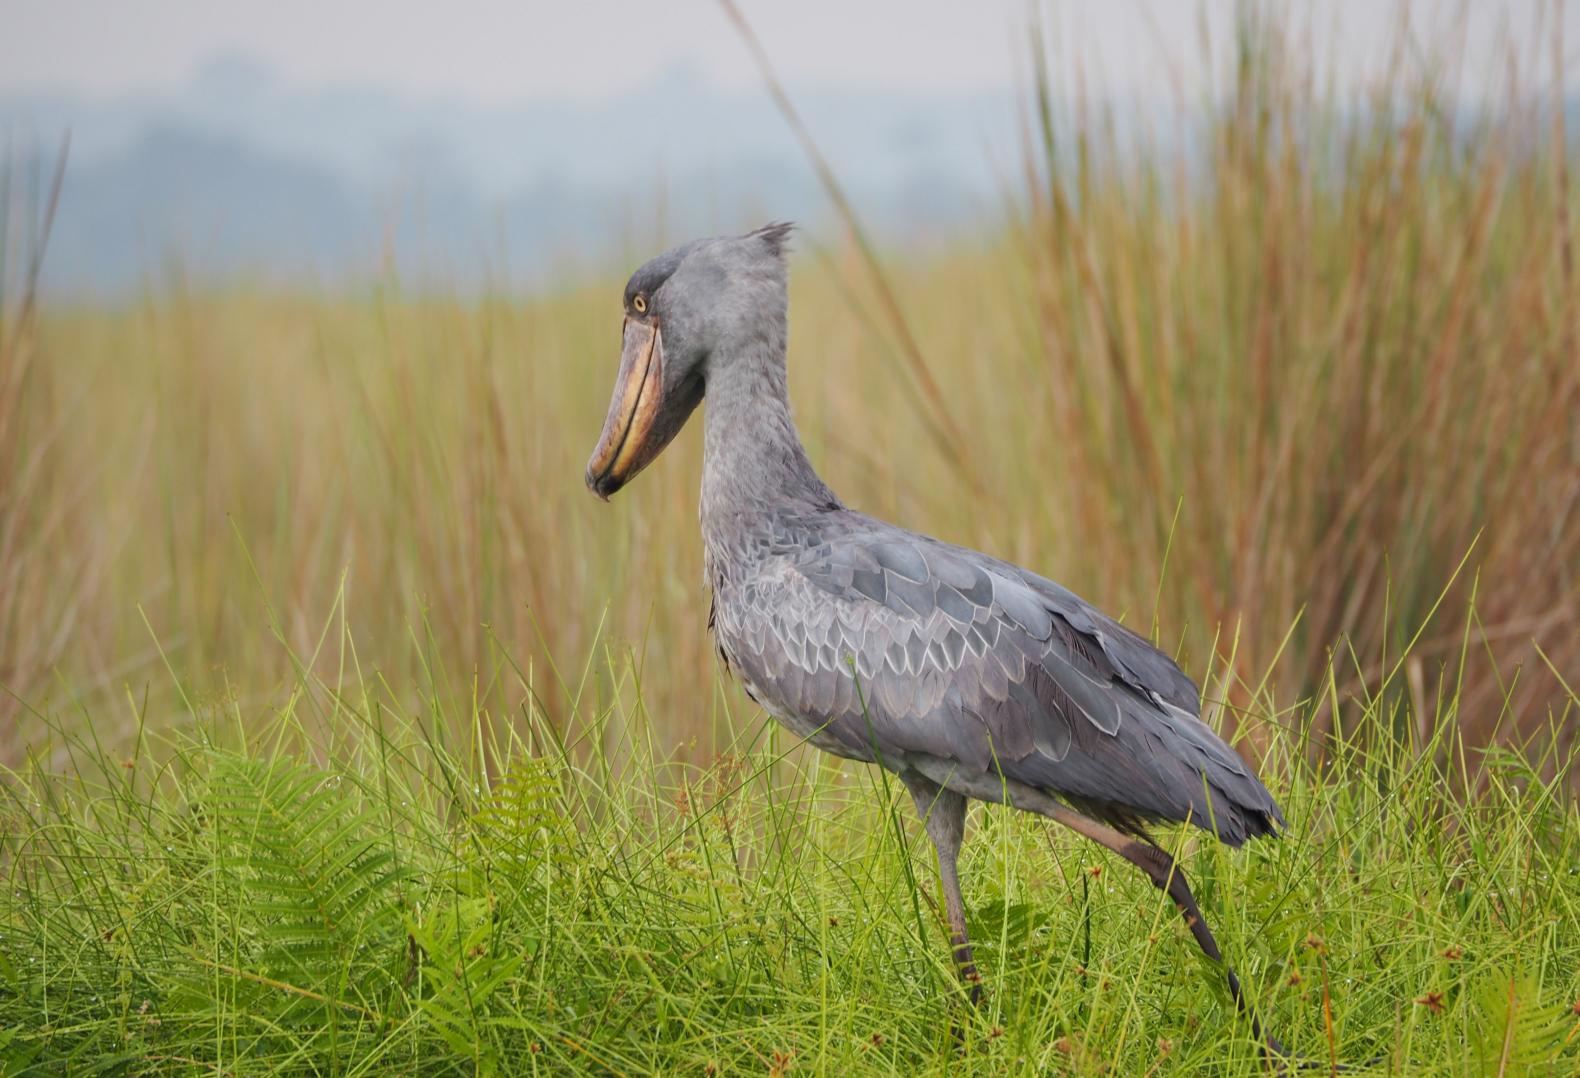 Uganda, East Africa Birds and Wildlife